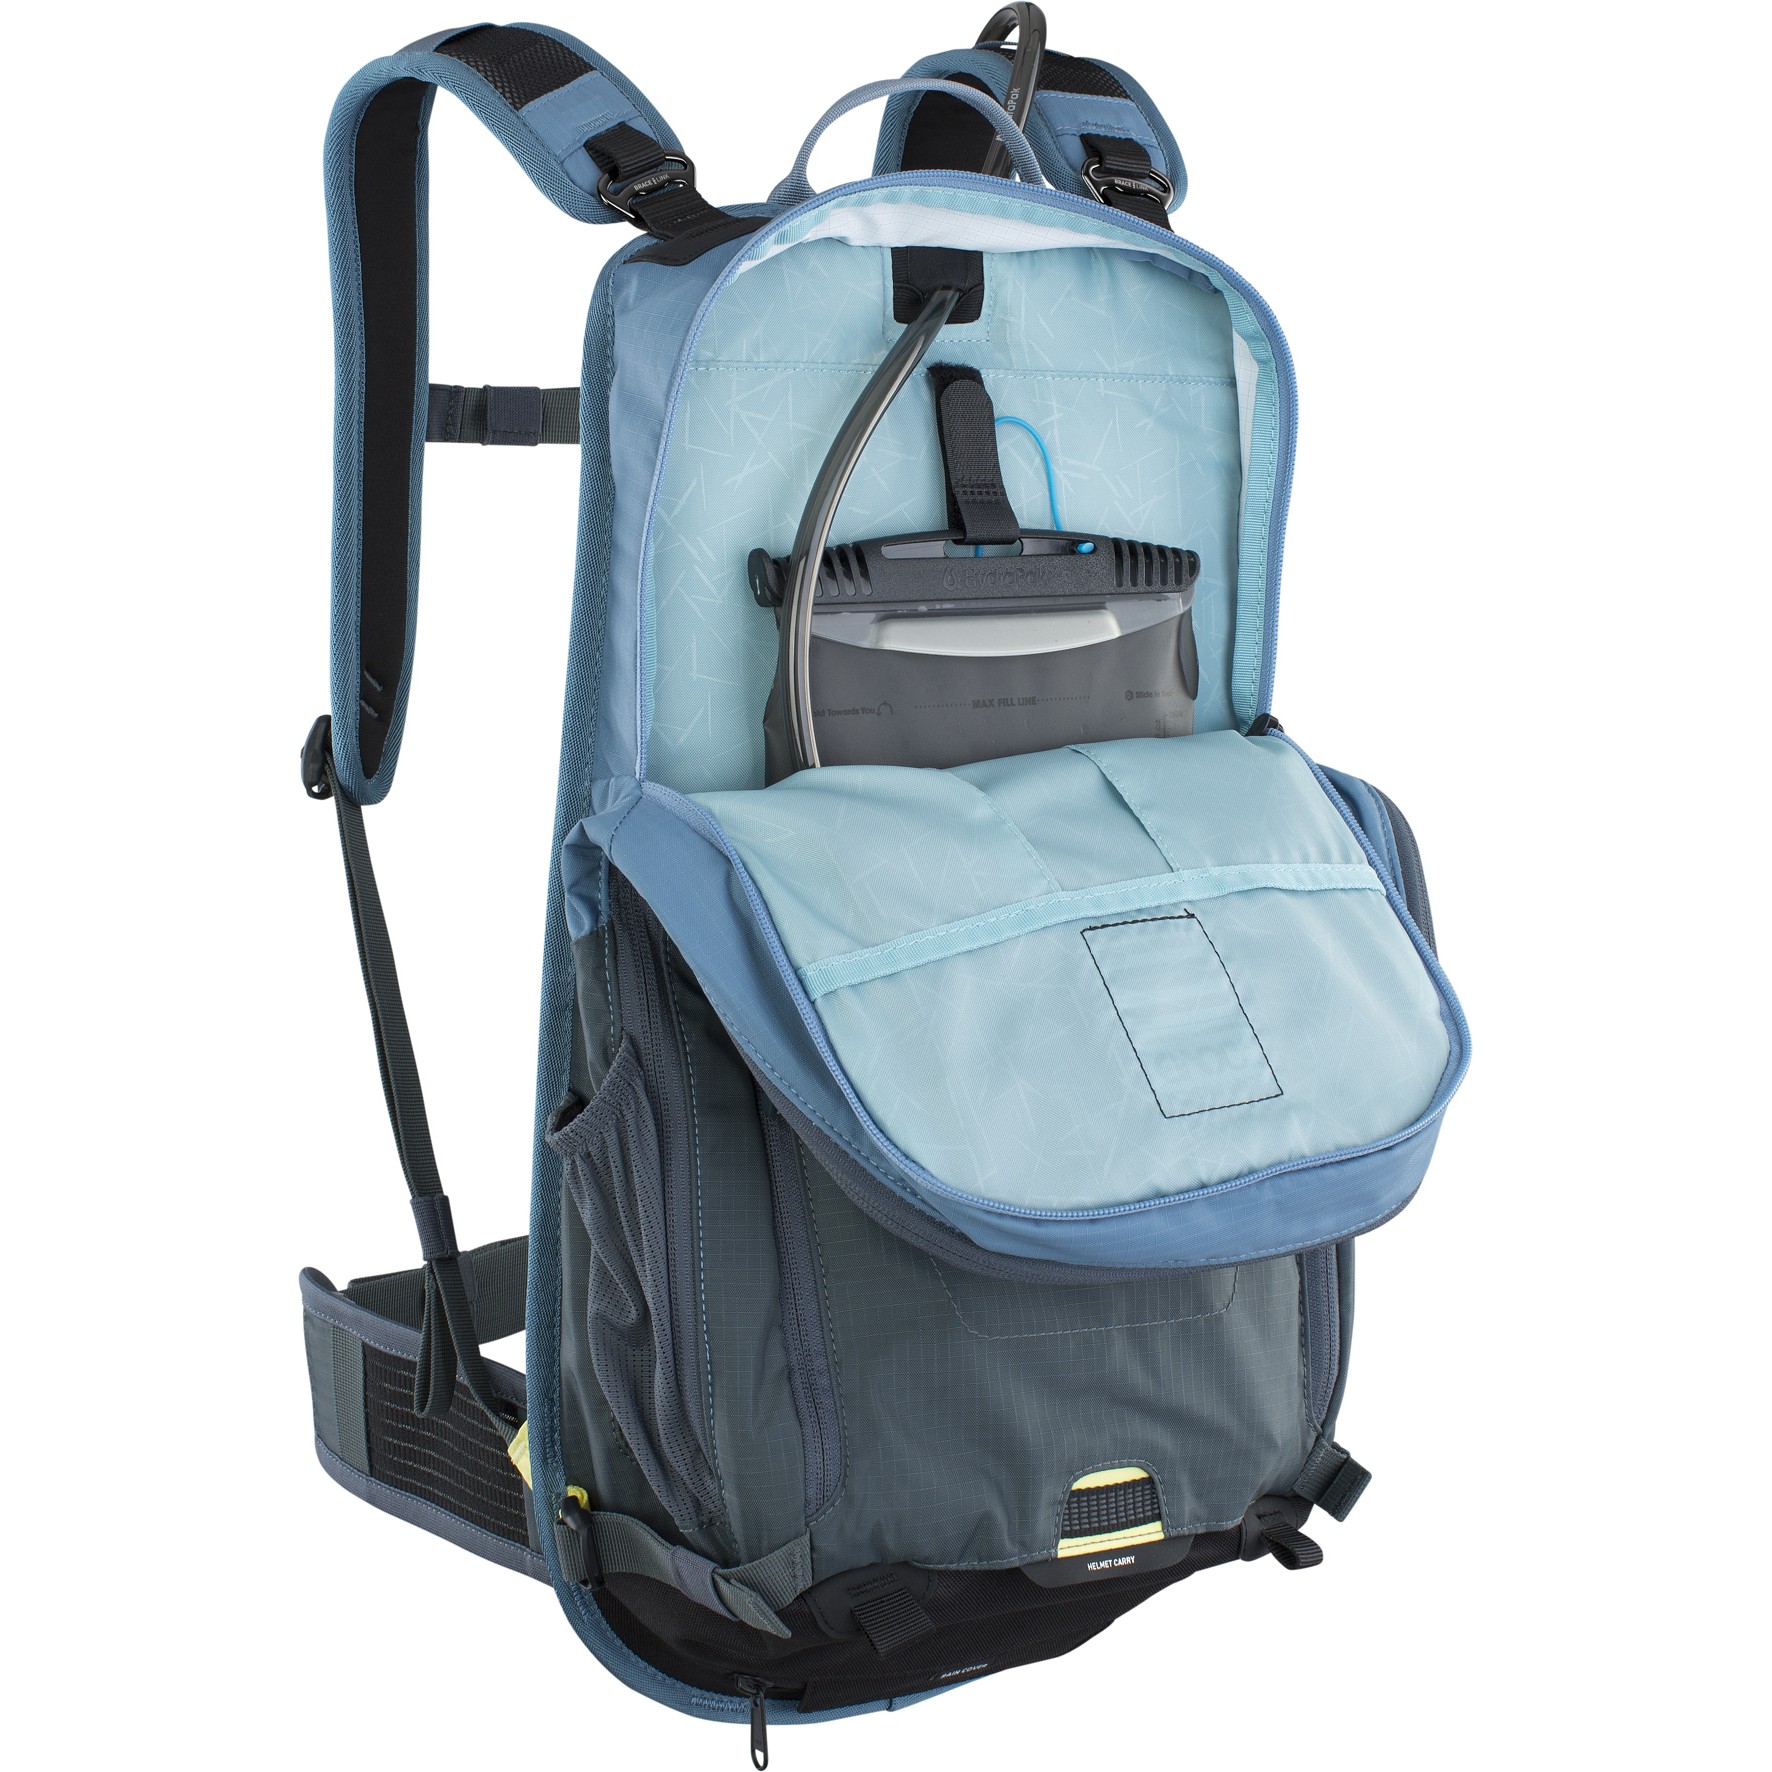 Así es la nueva mochila EVOC Trail Pro para MTB